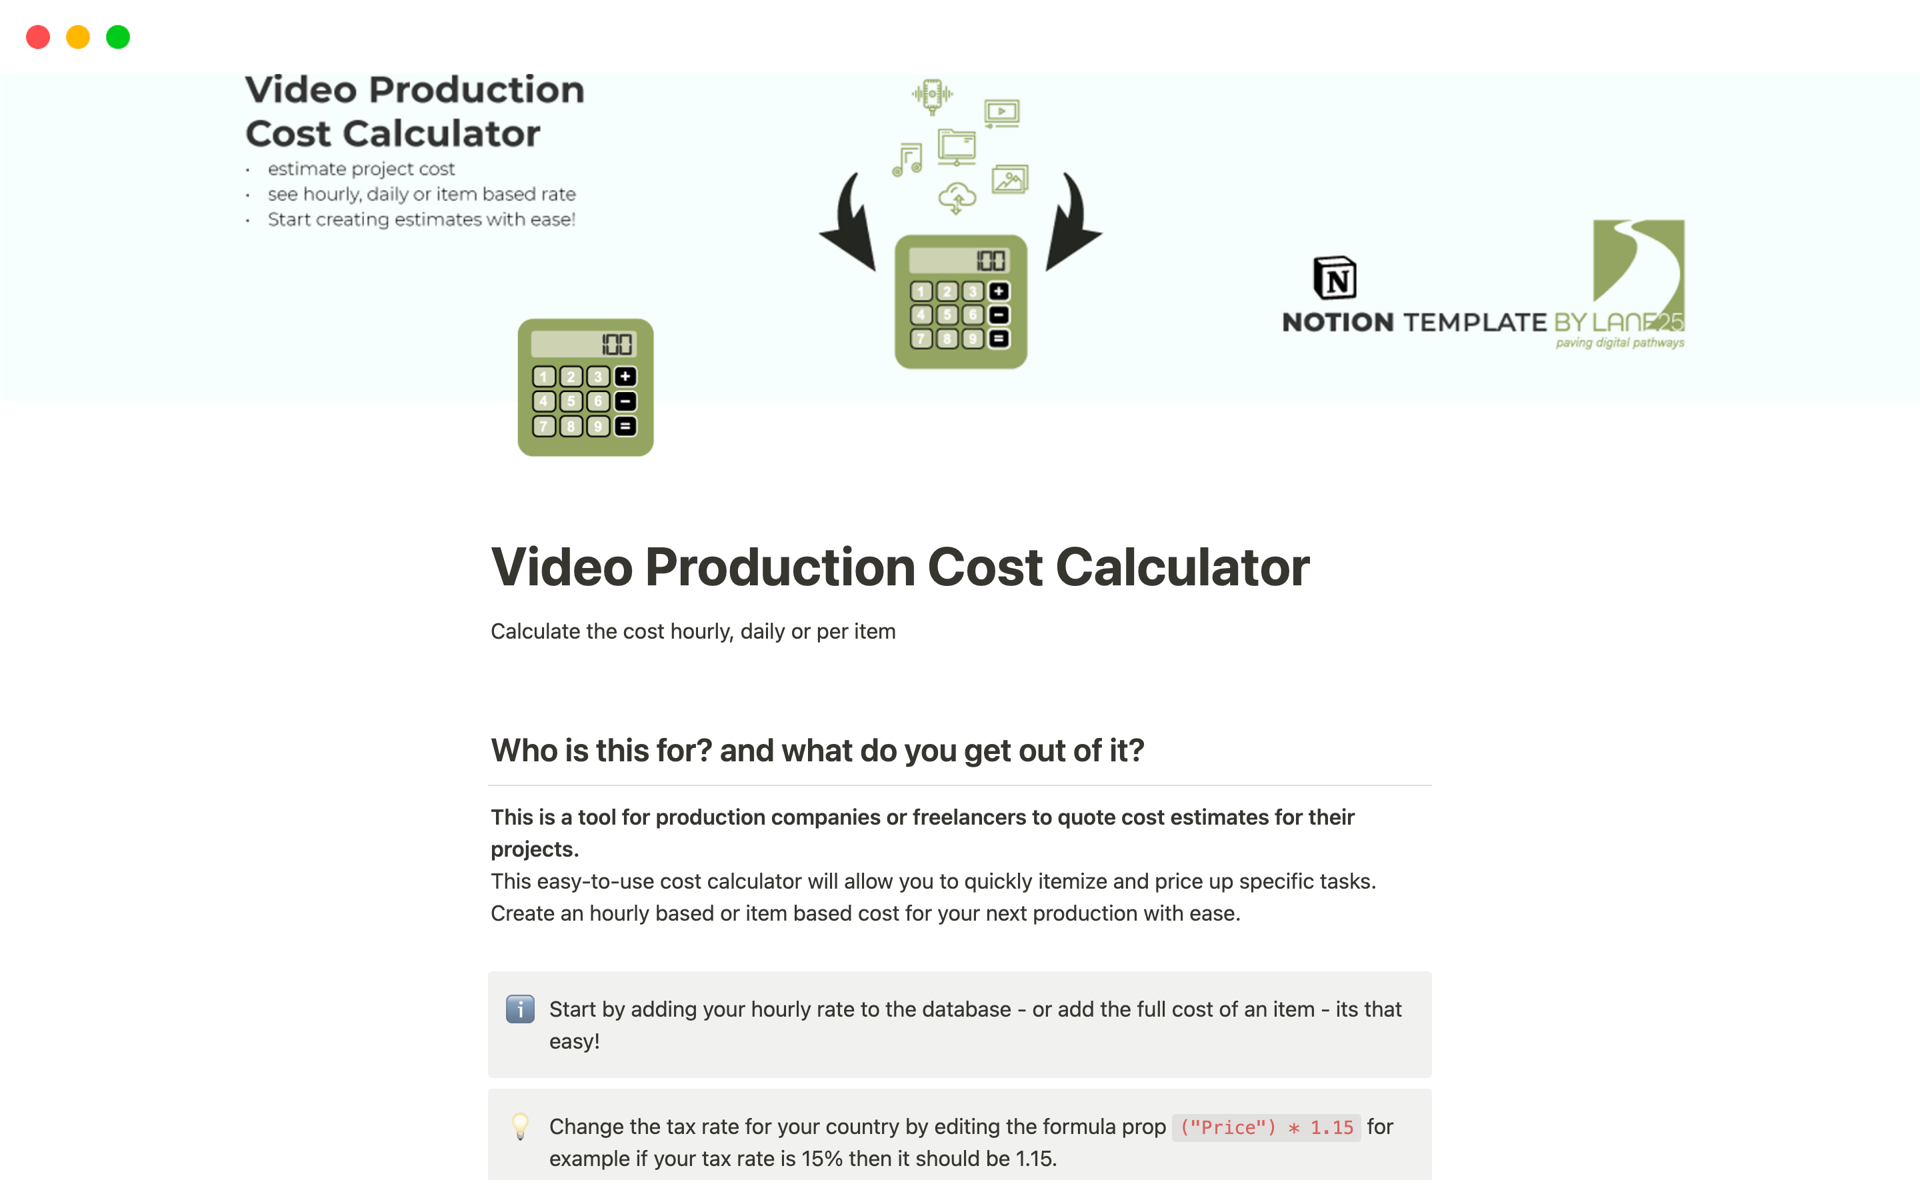 Vista previa de plantilla para Video Production Cost Calculator